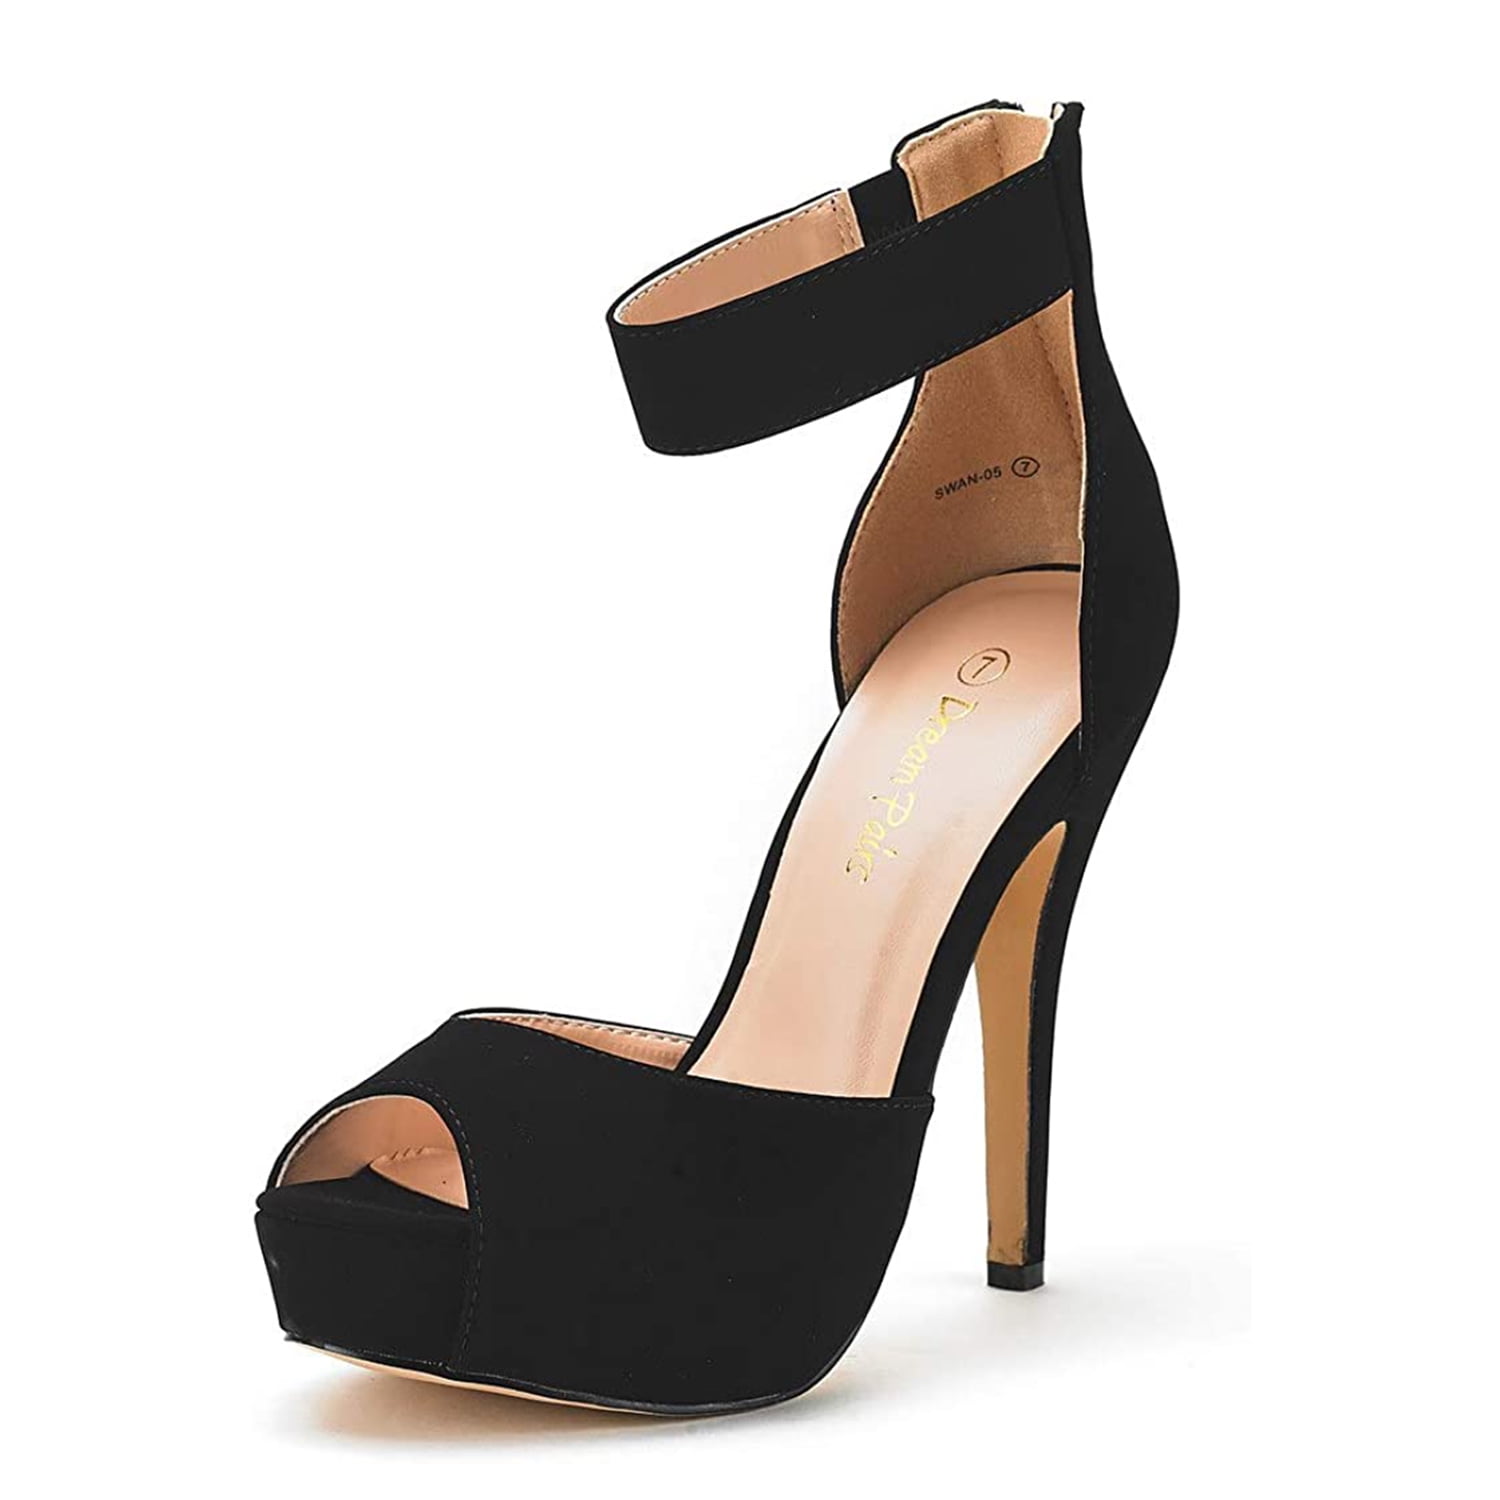 Dream Pairs Women Ankle Platform Dress Shoes Back Zipper Peep Toe High Heel Pump Shoes SWAN-05 BLACK/NUBUCK Size 9